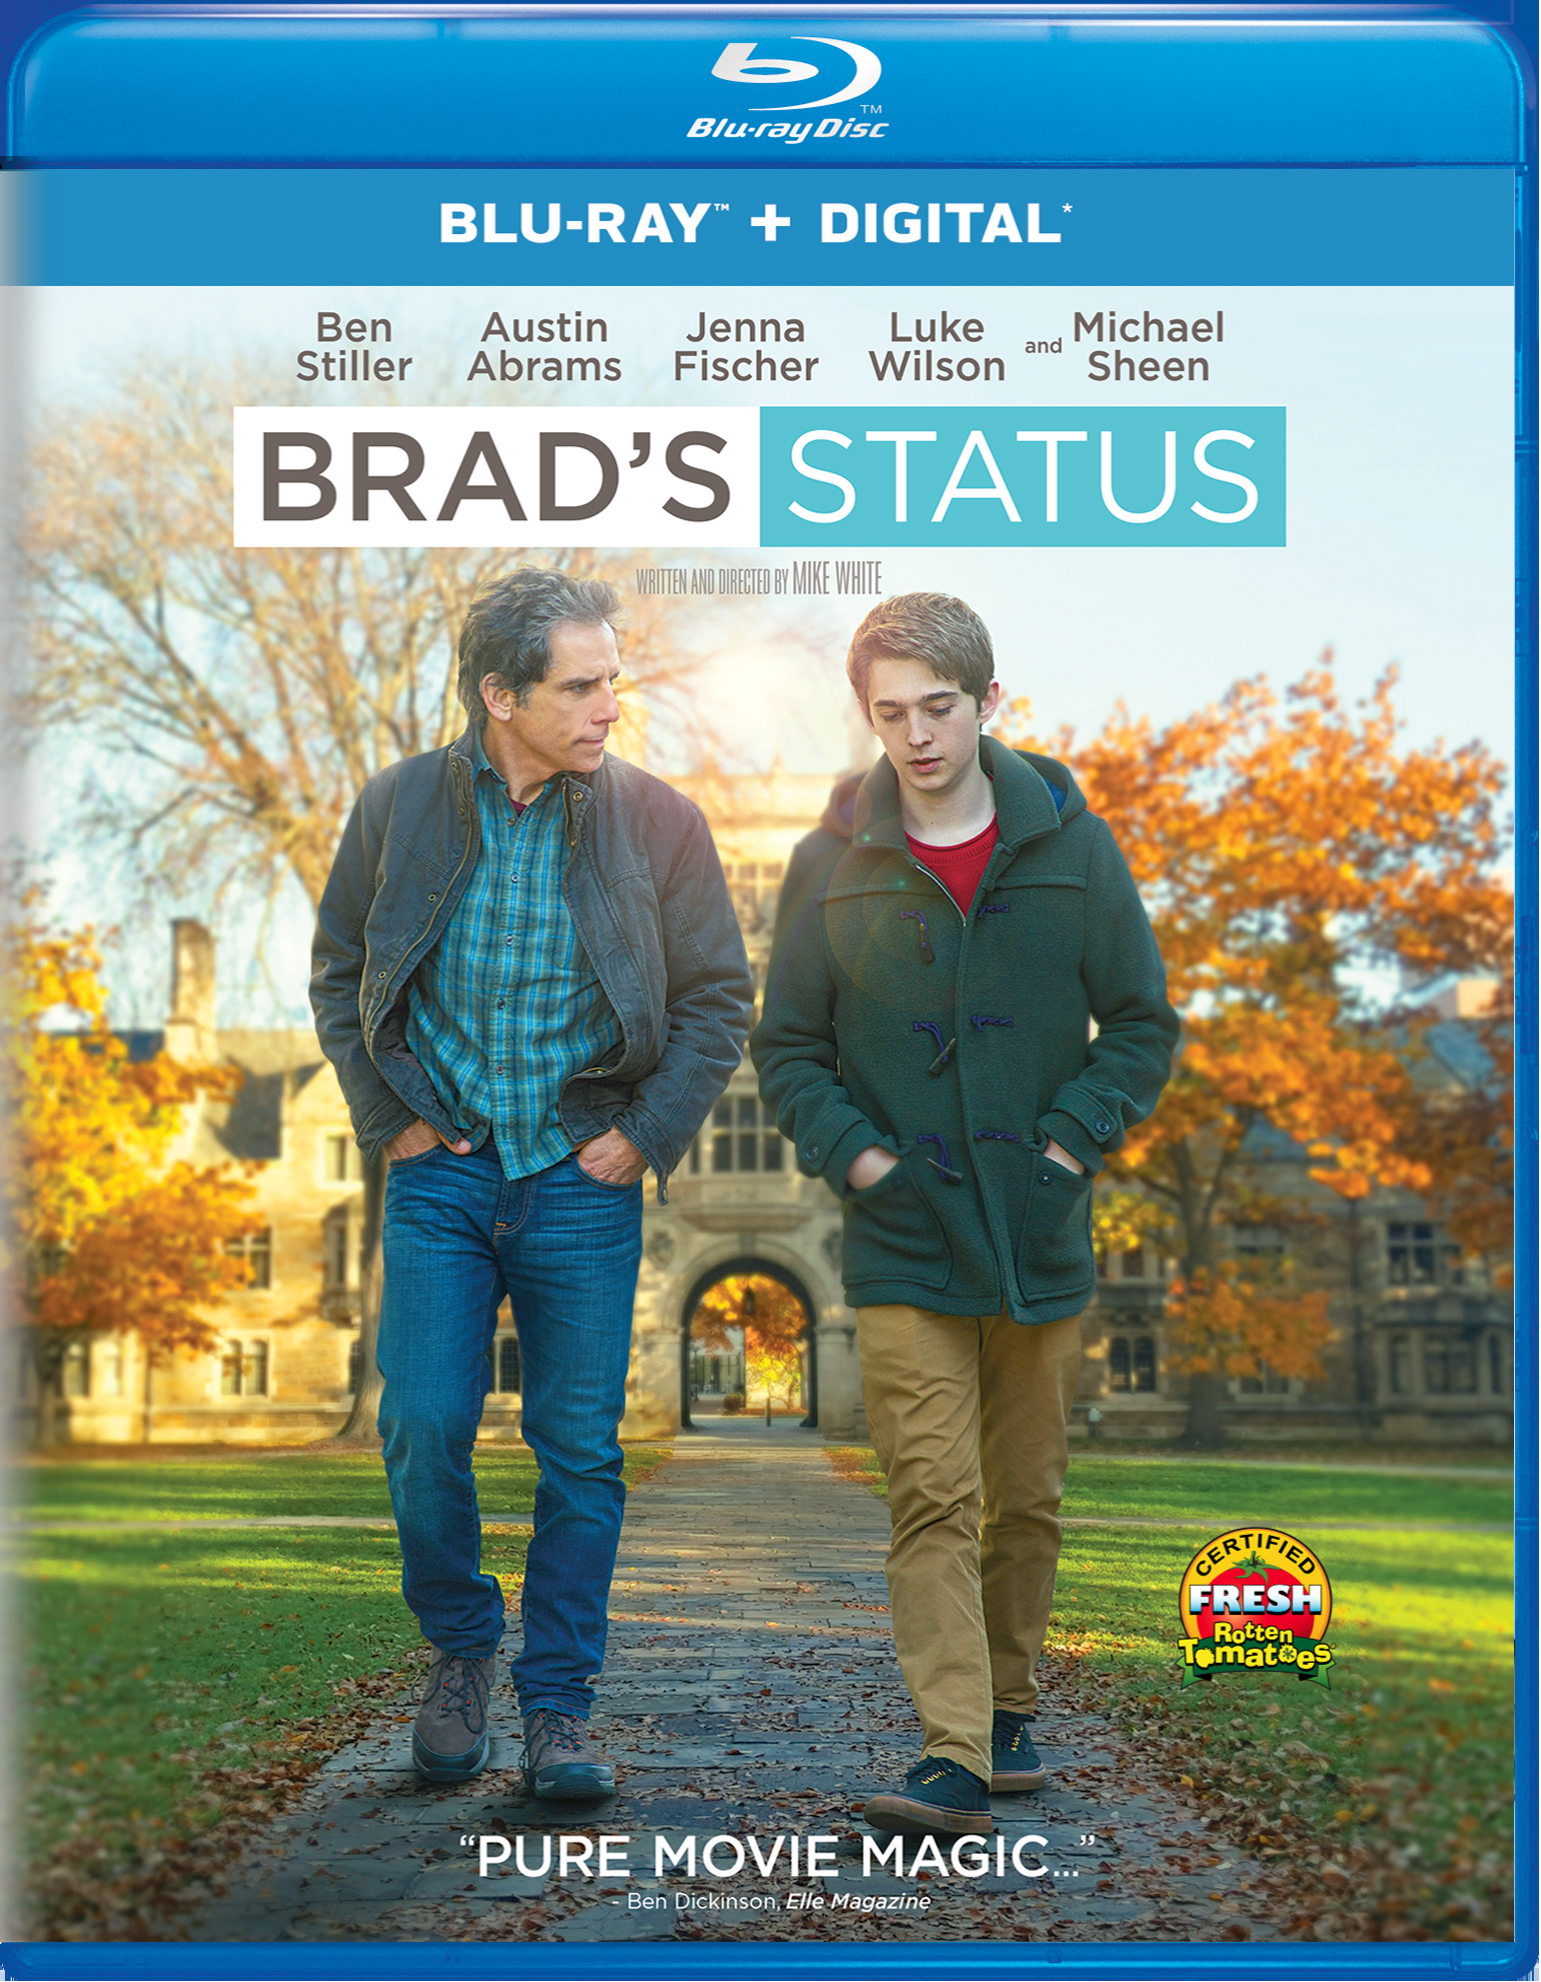 Brad's Status (Blu-ray + Digital HD) - Blu-ray [ 2017 ]  - Comedy Movies On Blu-ray - Movies On GRUV